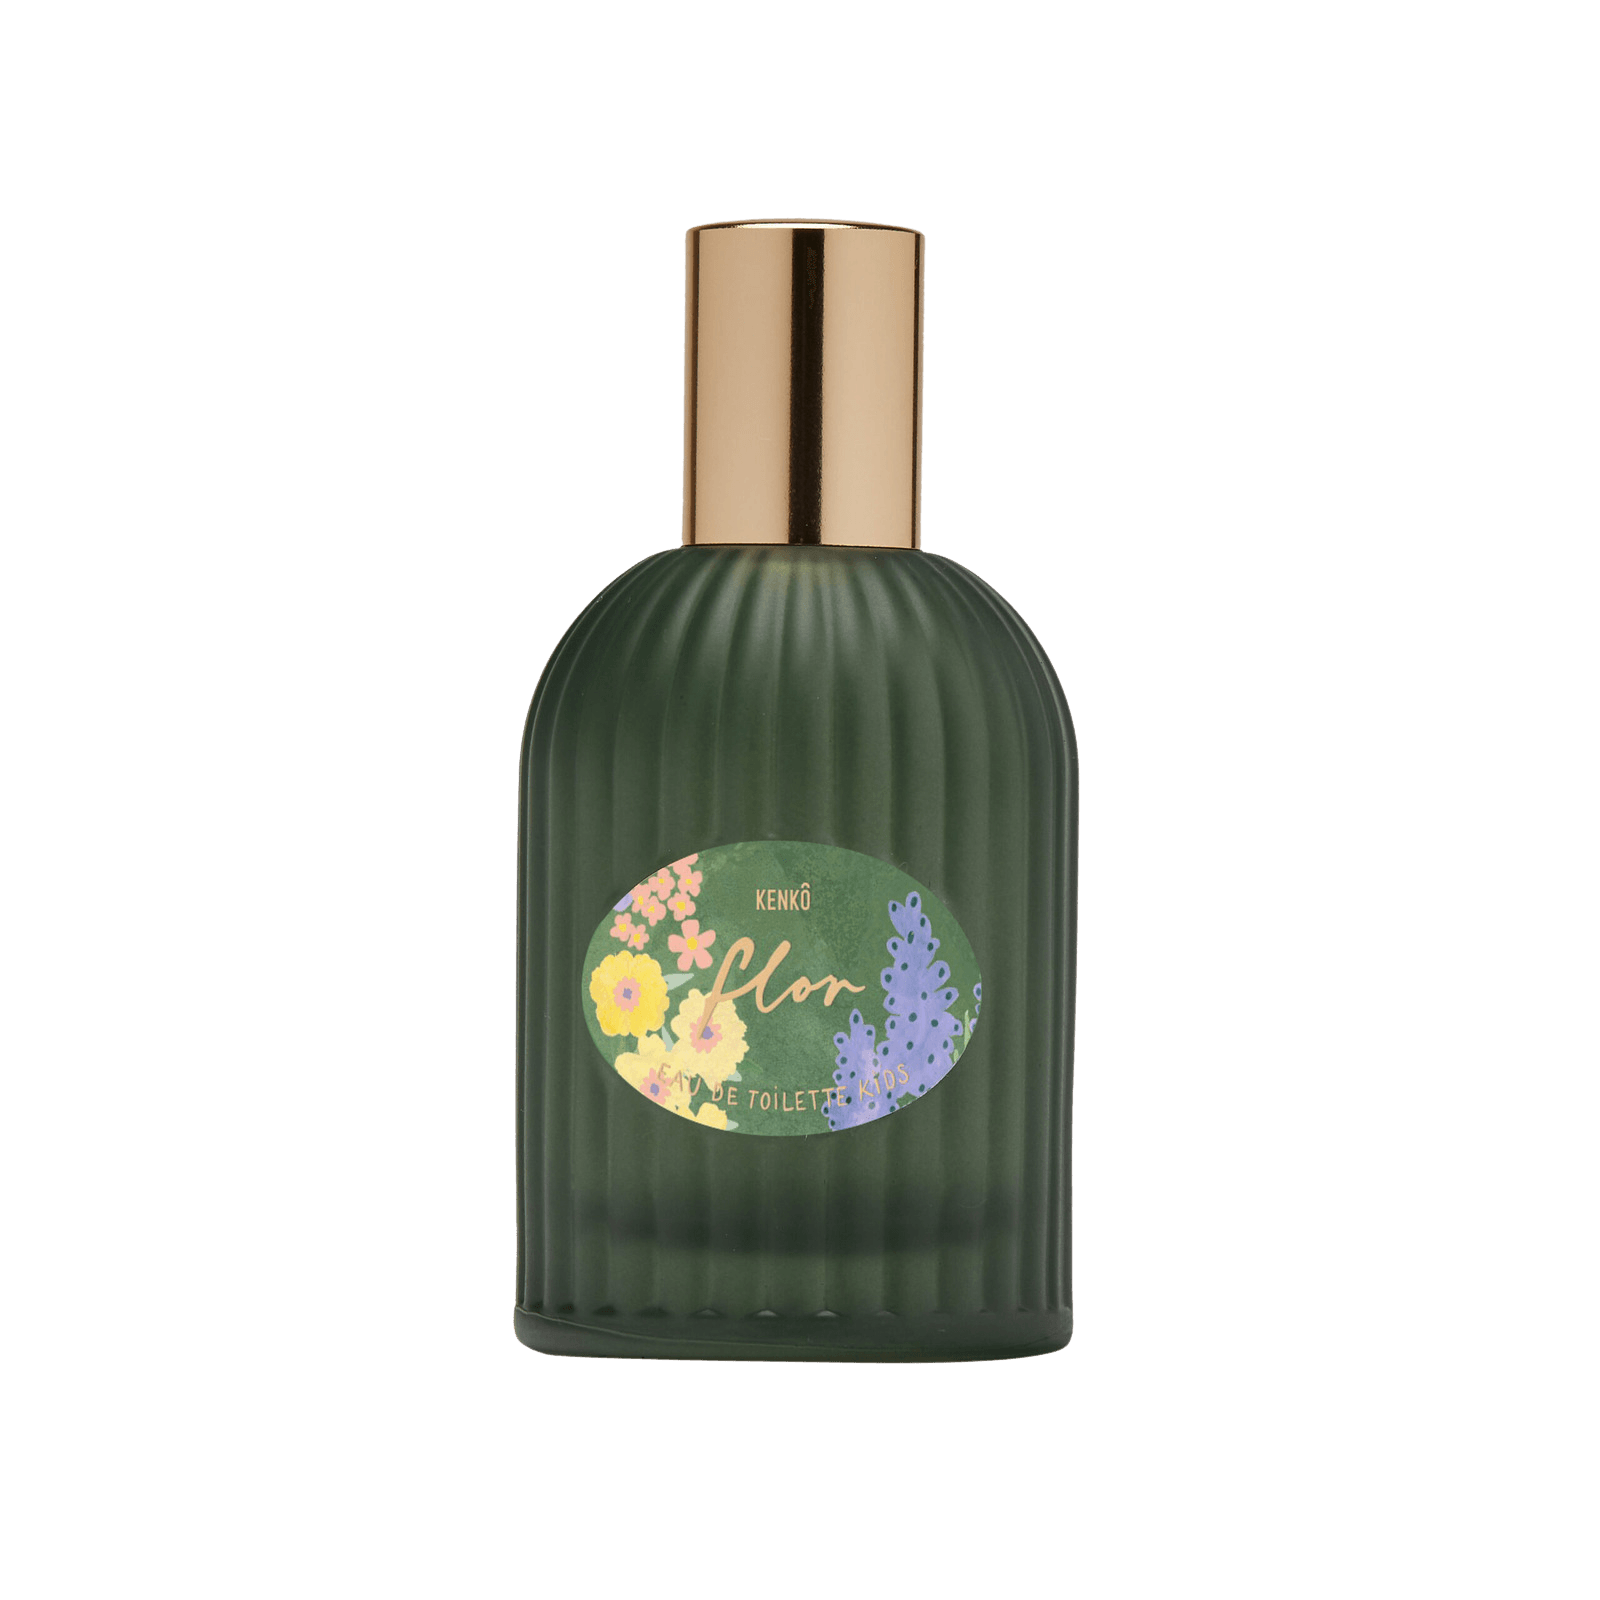 Kenko - Flor eau de toilette | Perfume Lounge